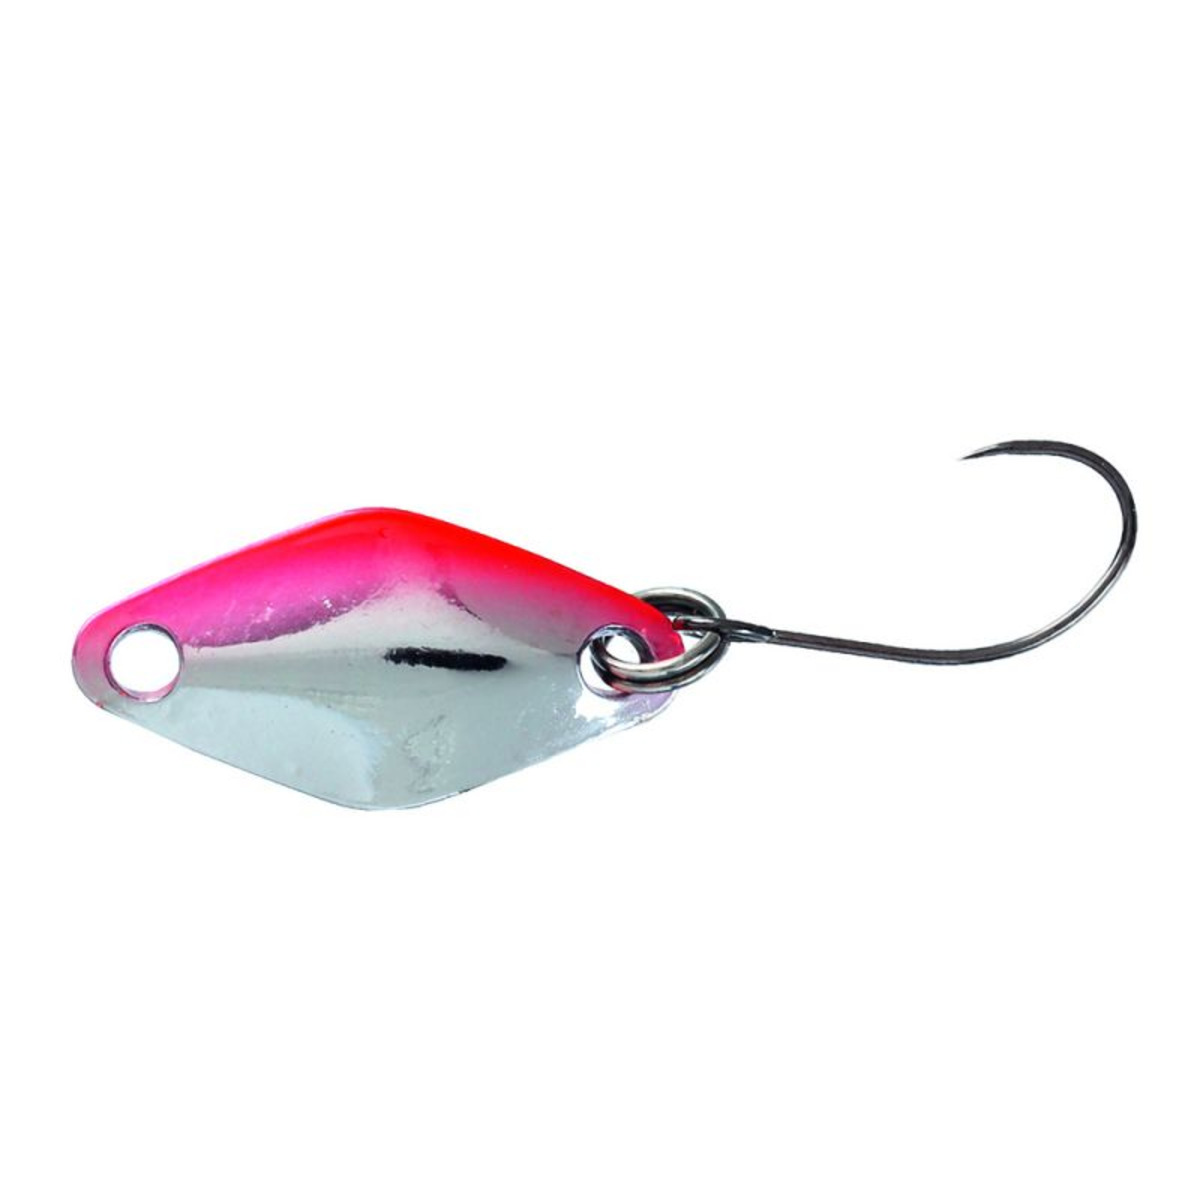 Herakles Kite Spoon - 1.2 g - Silver Red